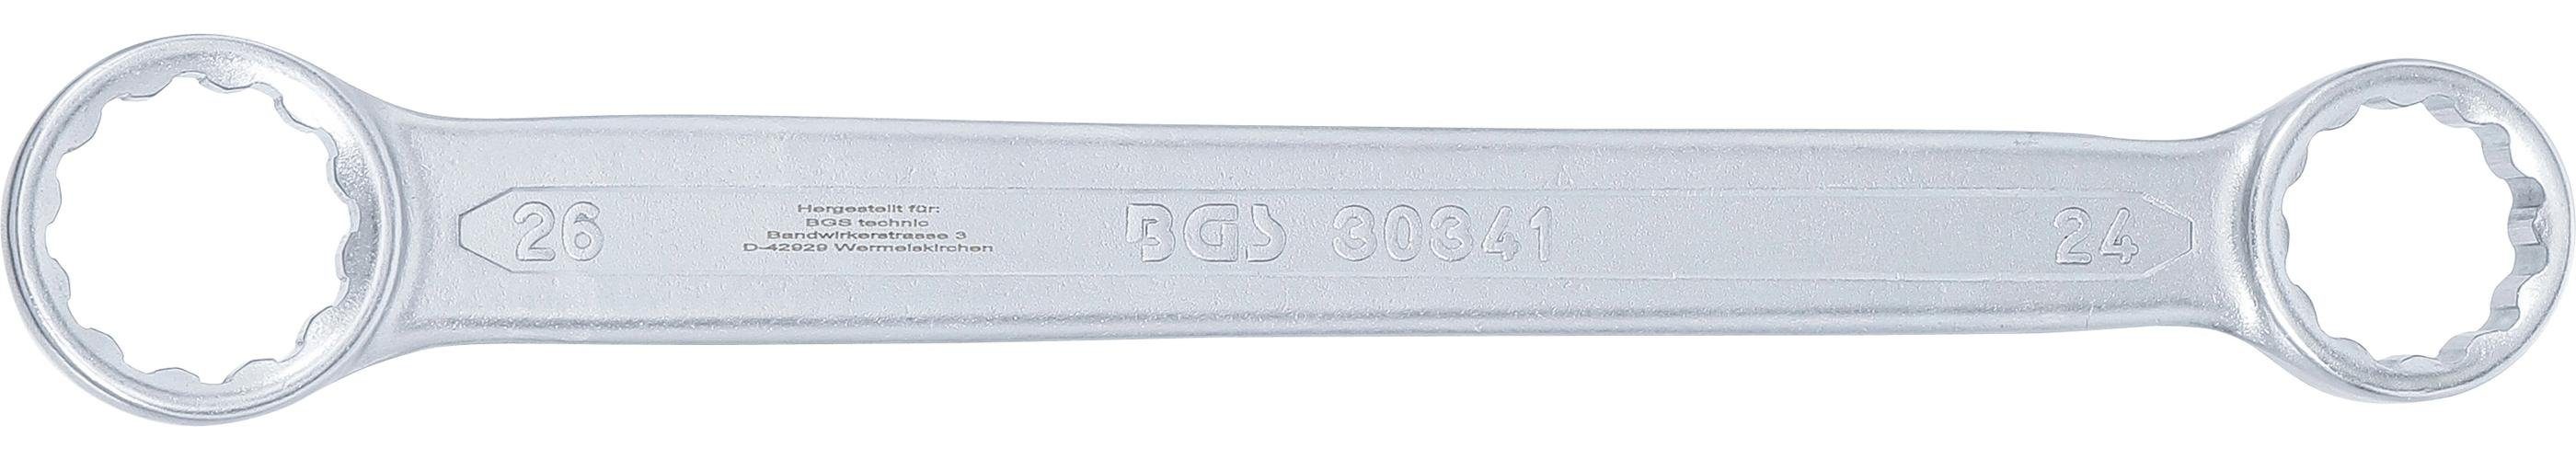 SW Doppel-Ringschlüssel, flach, 26 extra BGS technic 24 mm x Ringschlüssel